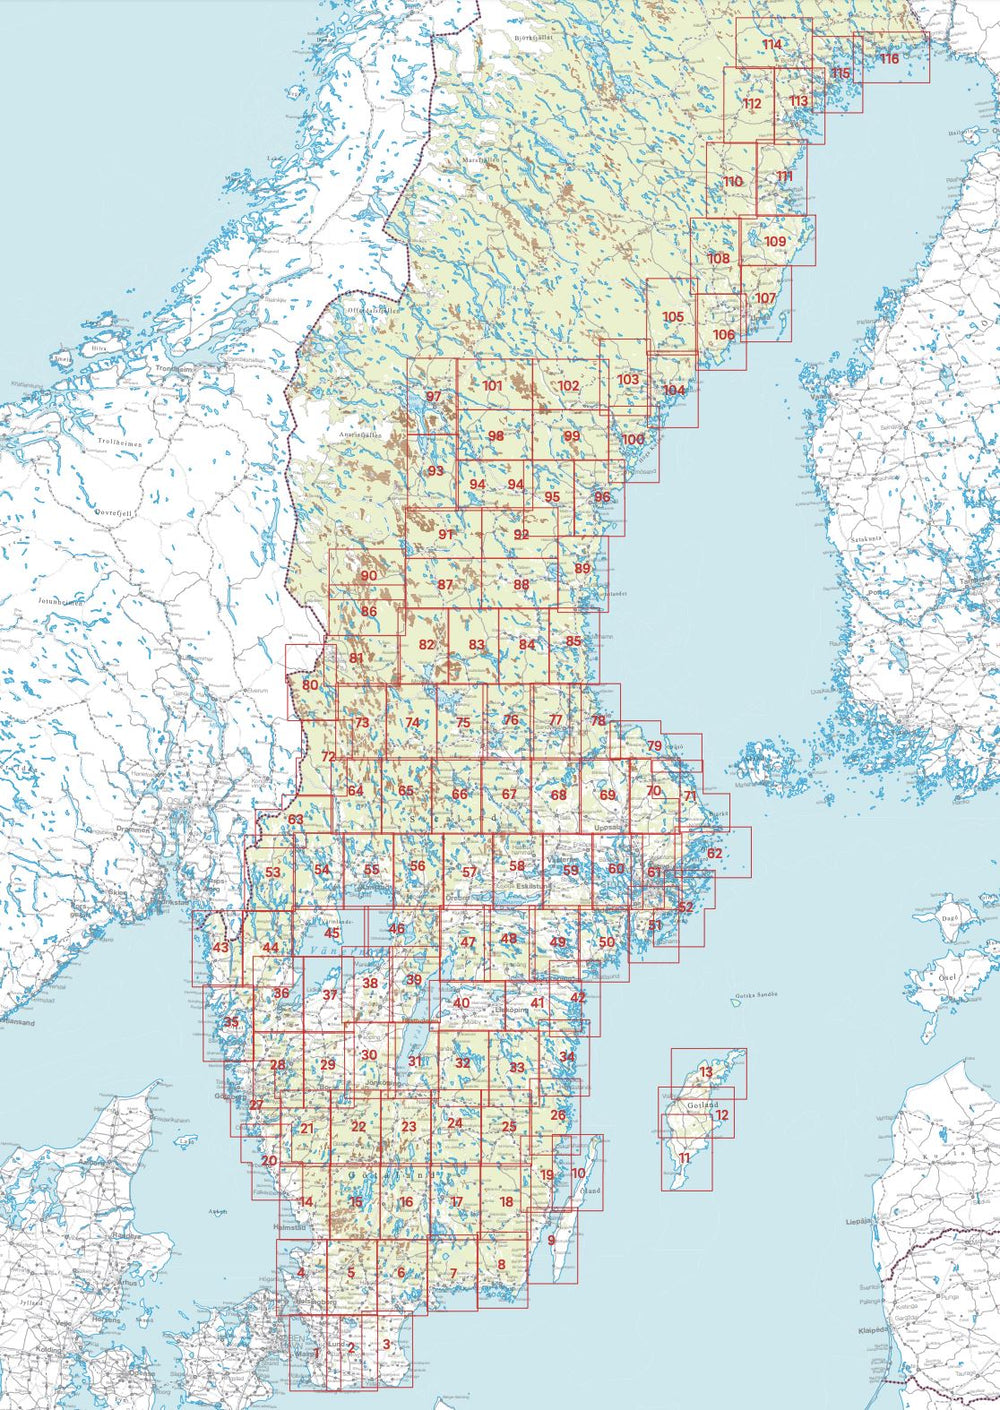 Carte topographique n° 30 - Falköping (Suède) | Norstedts - Sverigeserien carte pliée Norstedts 